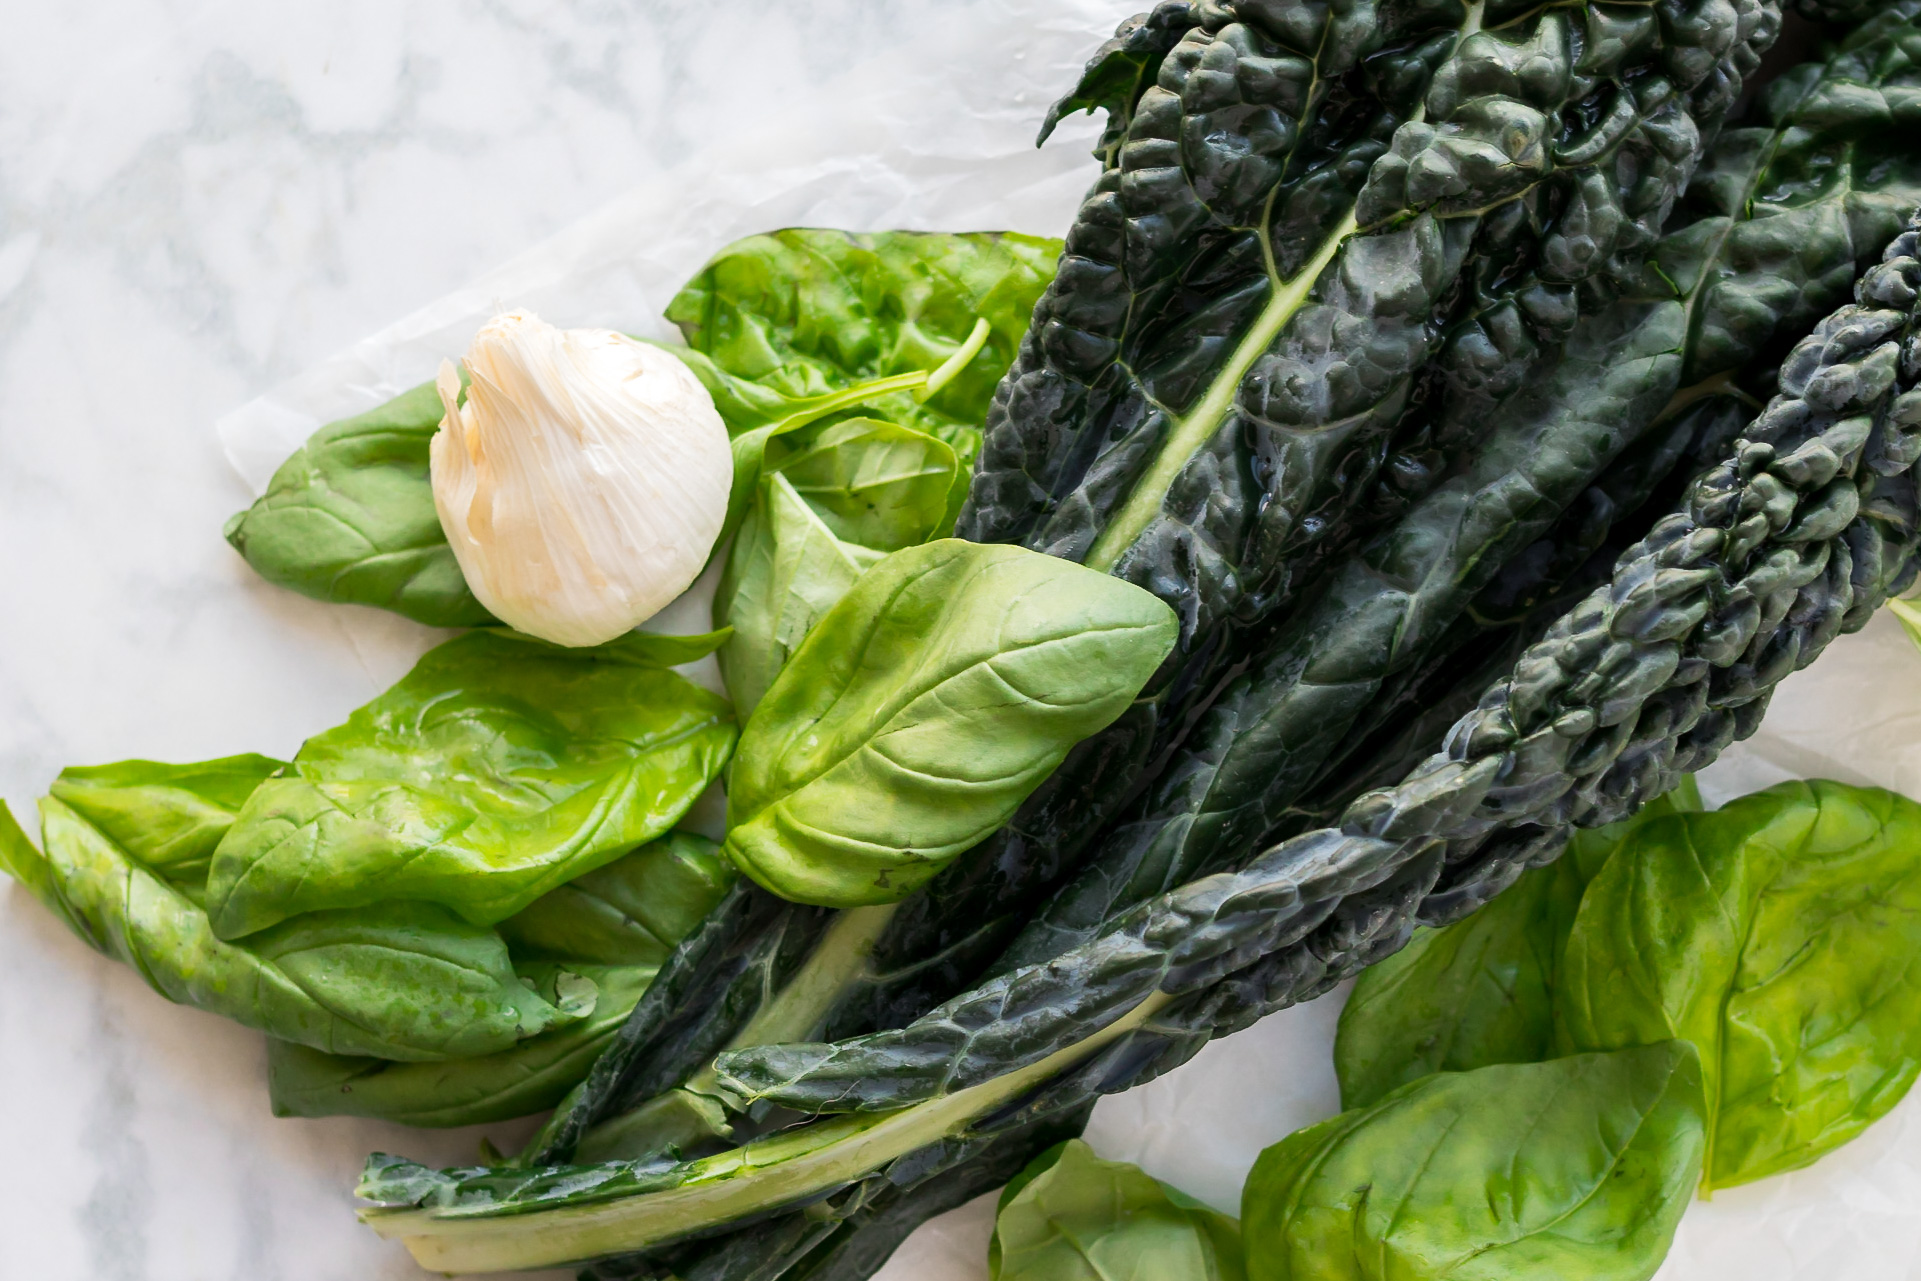 Garlic, basil, and kale on marble representing whole foods vegan multivitamins